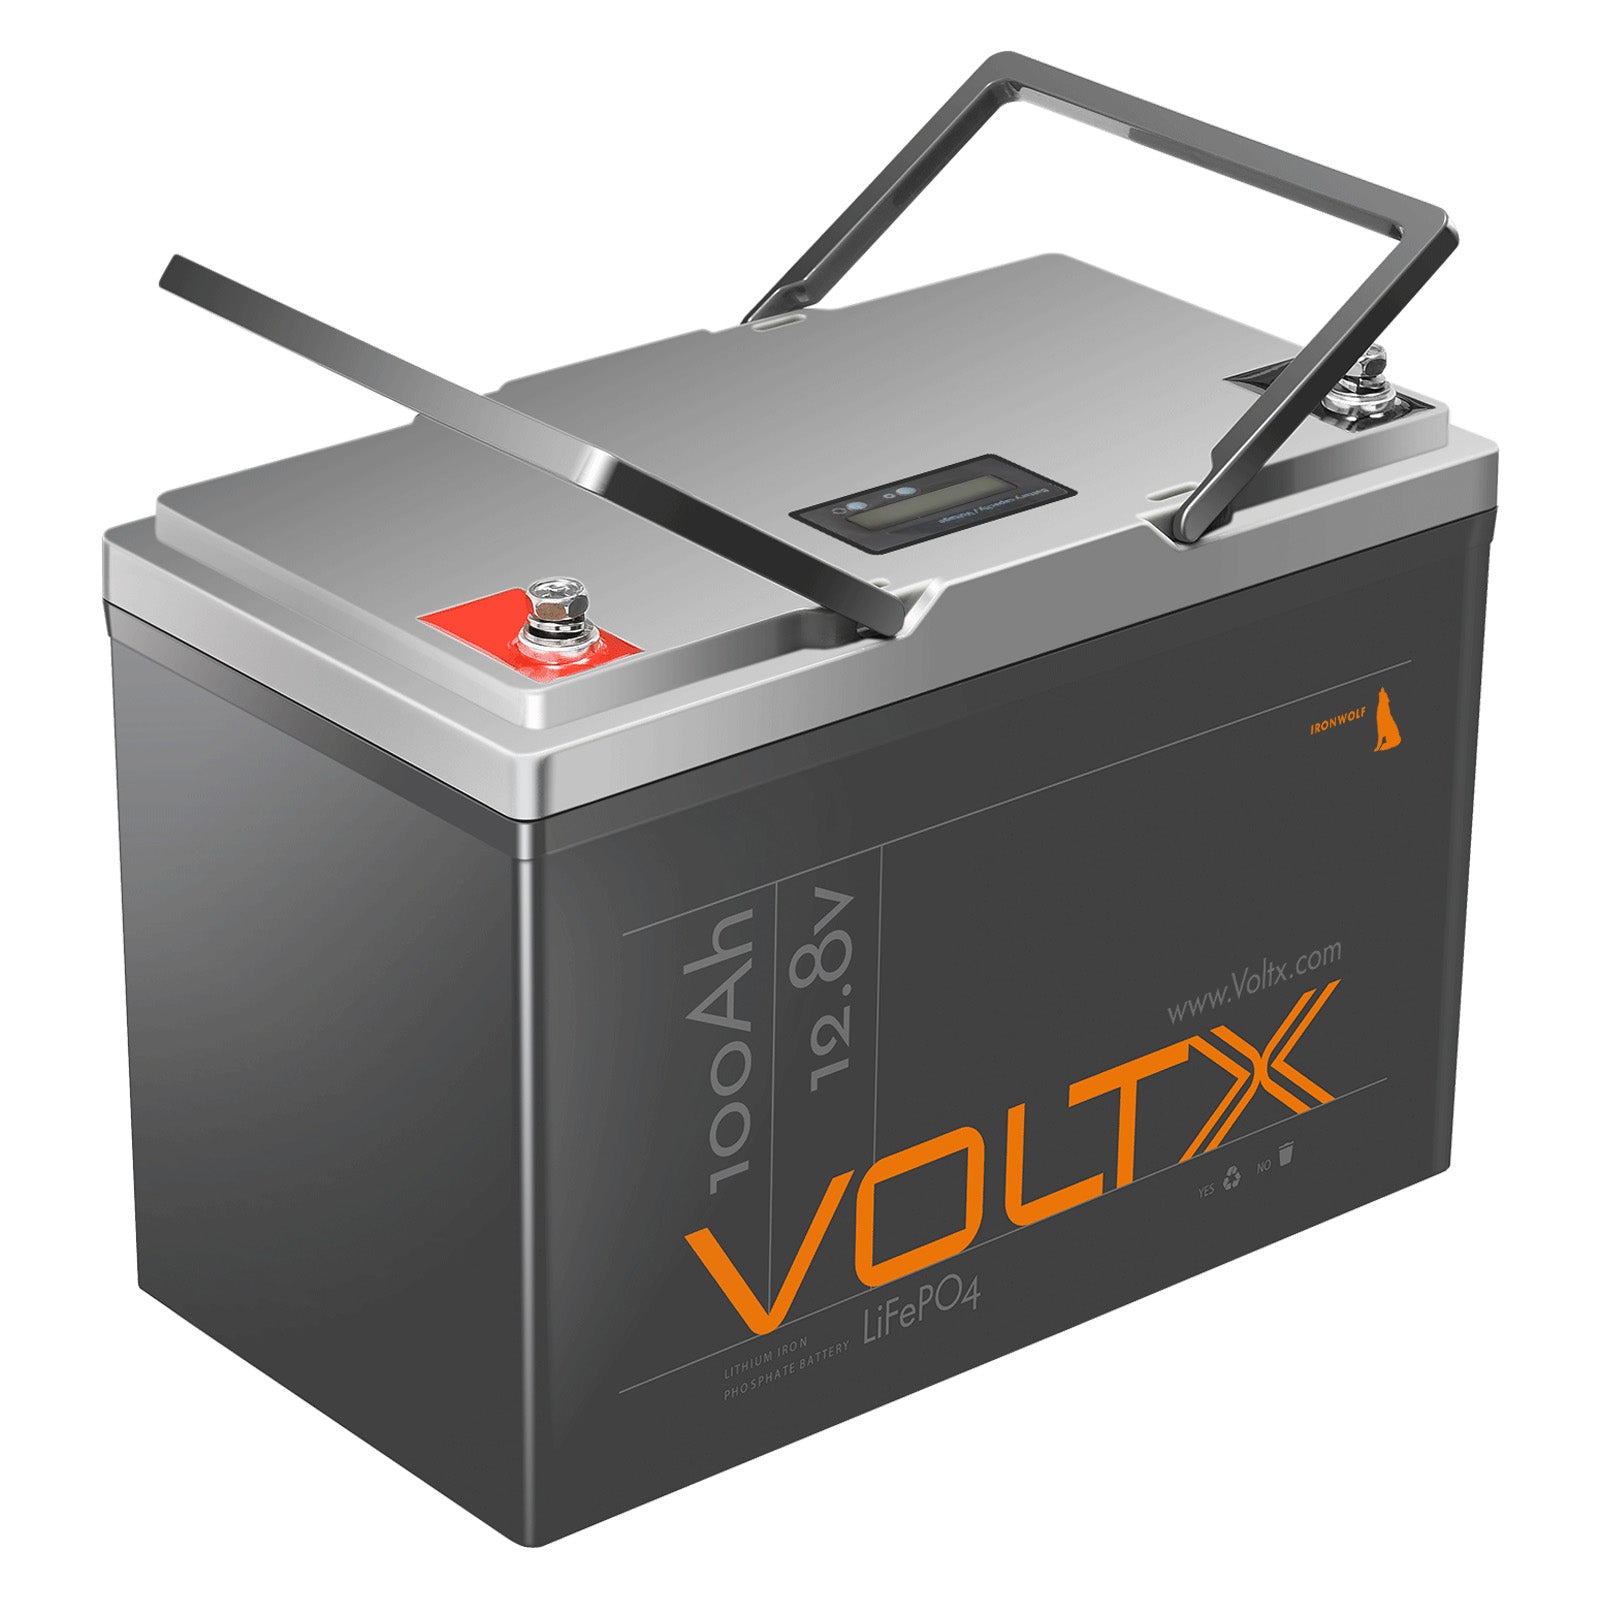 12V 100Ah | Heated & Bluetooth | LiFePO4 Battery